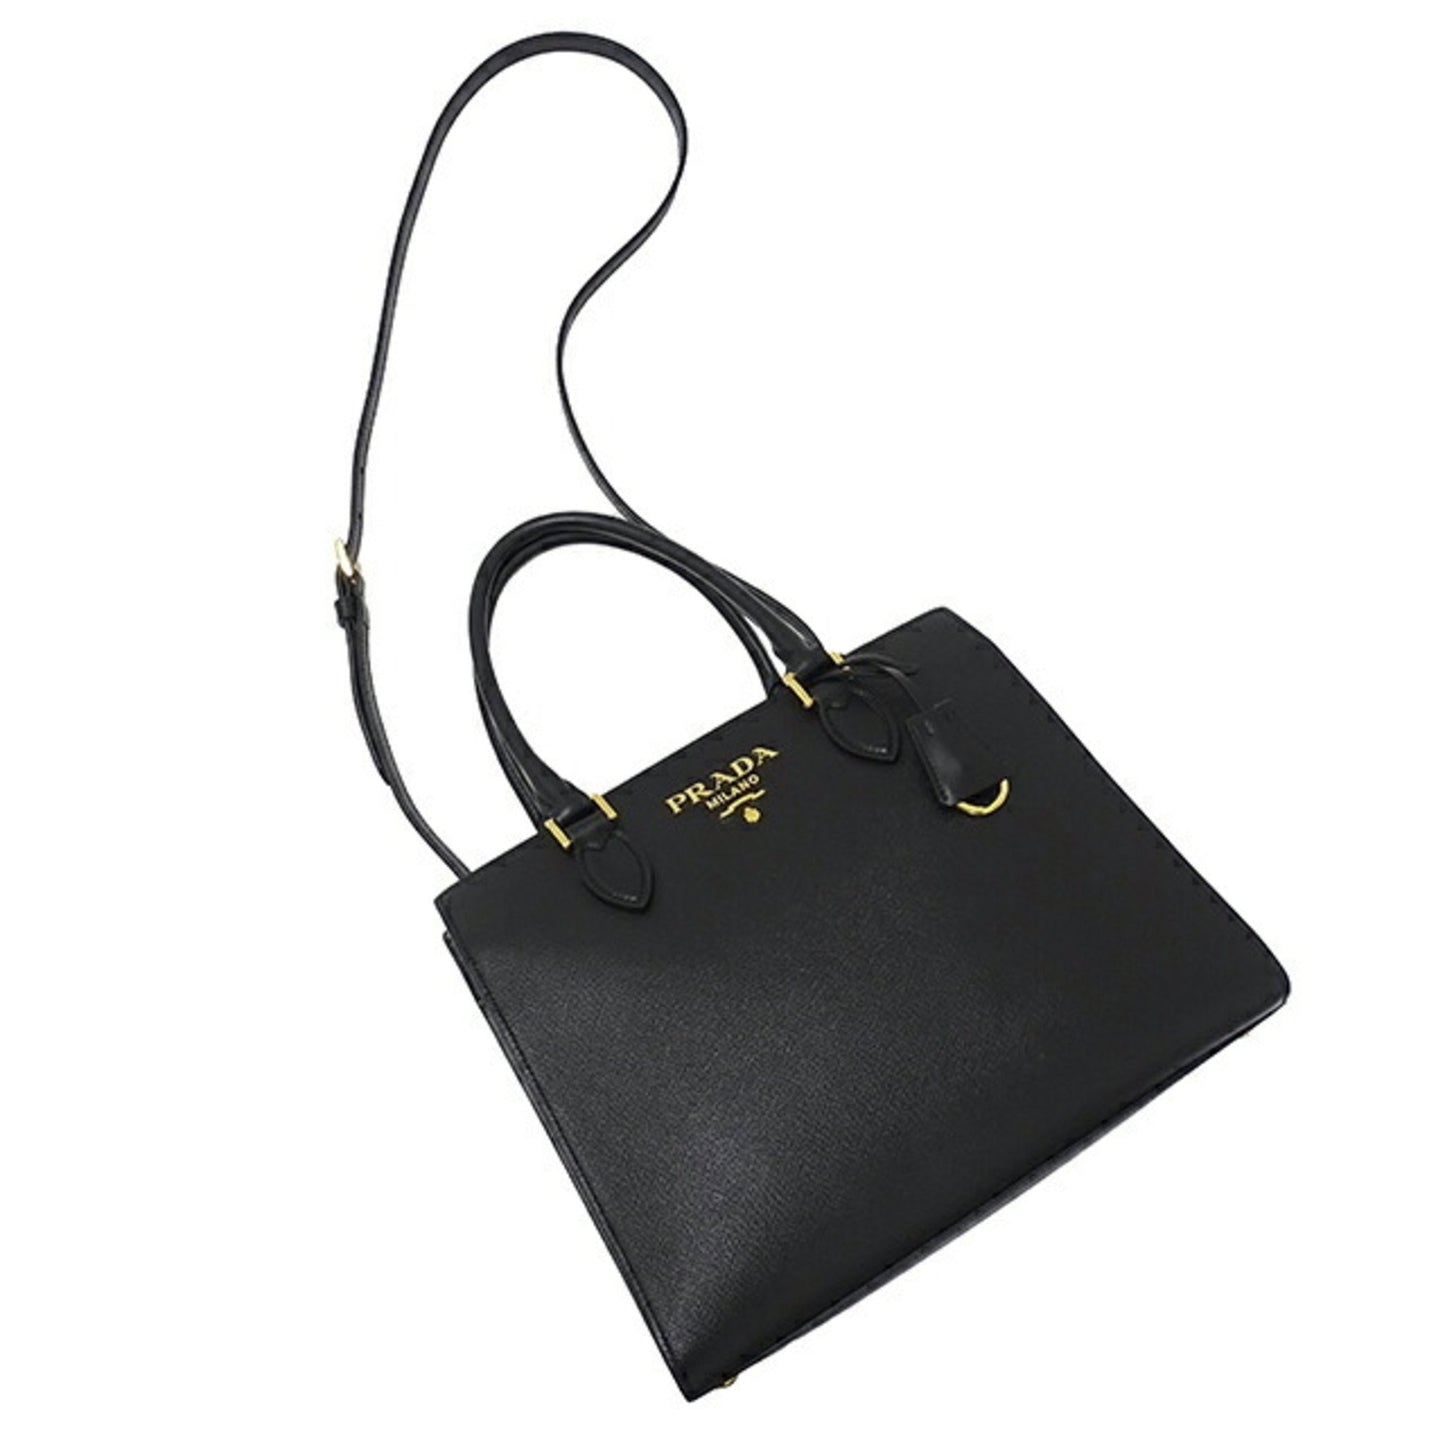 Prada Women's Black Leather Cross-Body Handbag with Clochette and Shoulder Strap in Black